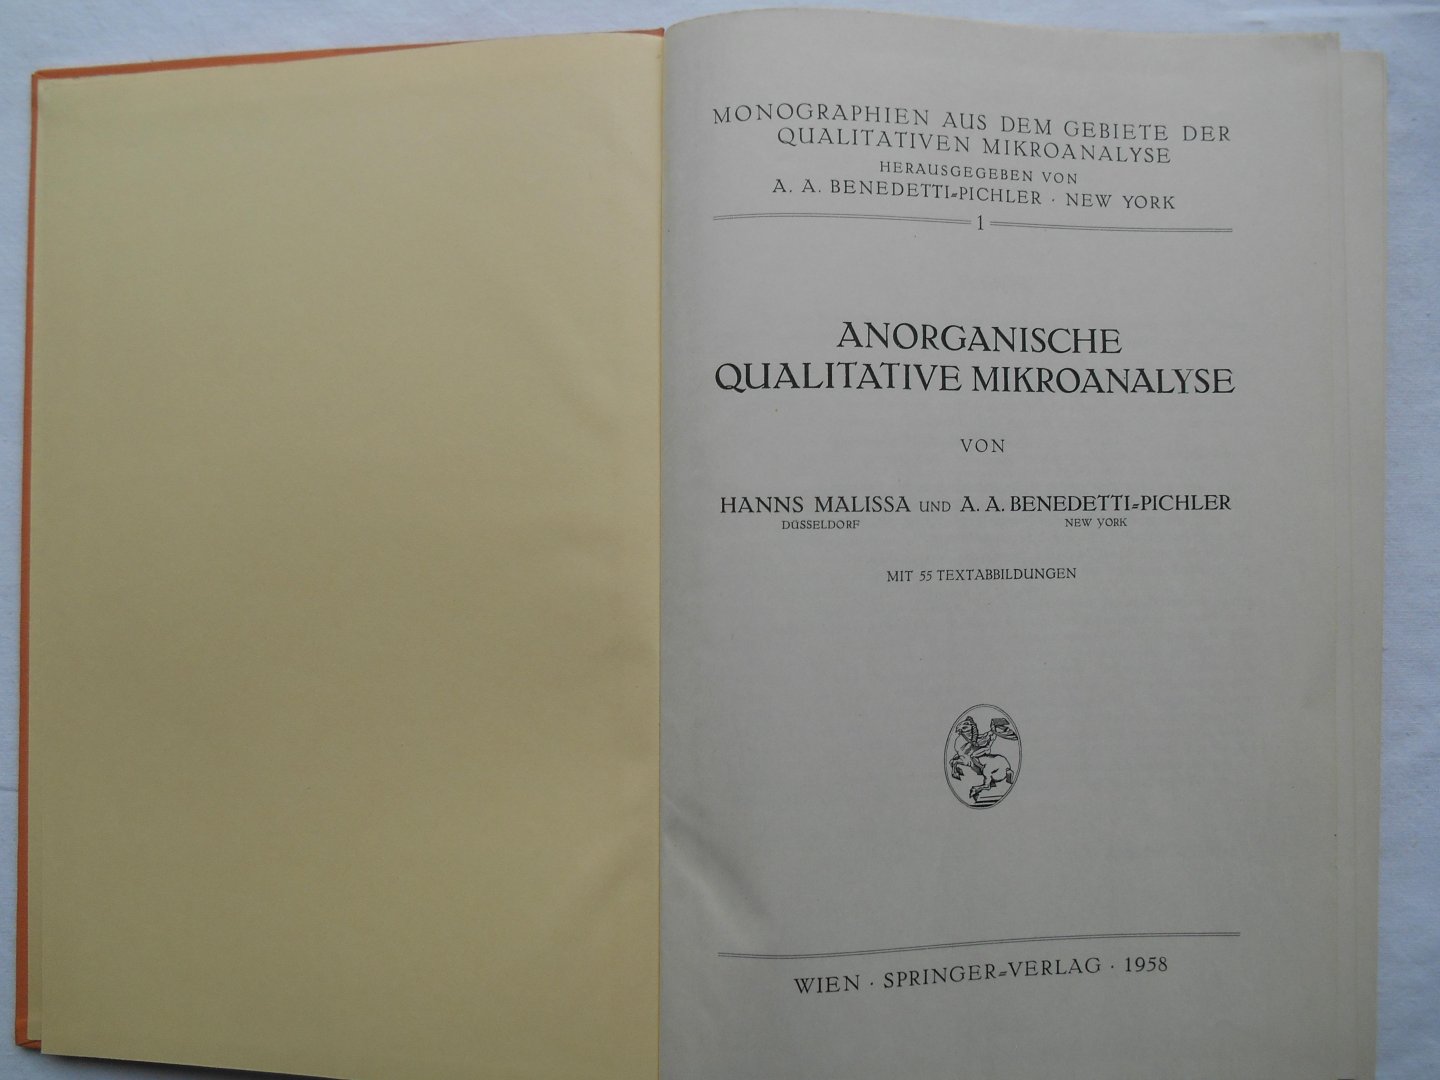 Malissa, Hanns und A.A. Benedetti-Pichler. - Anorganische Qualitative Mikroanalyse, Band I